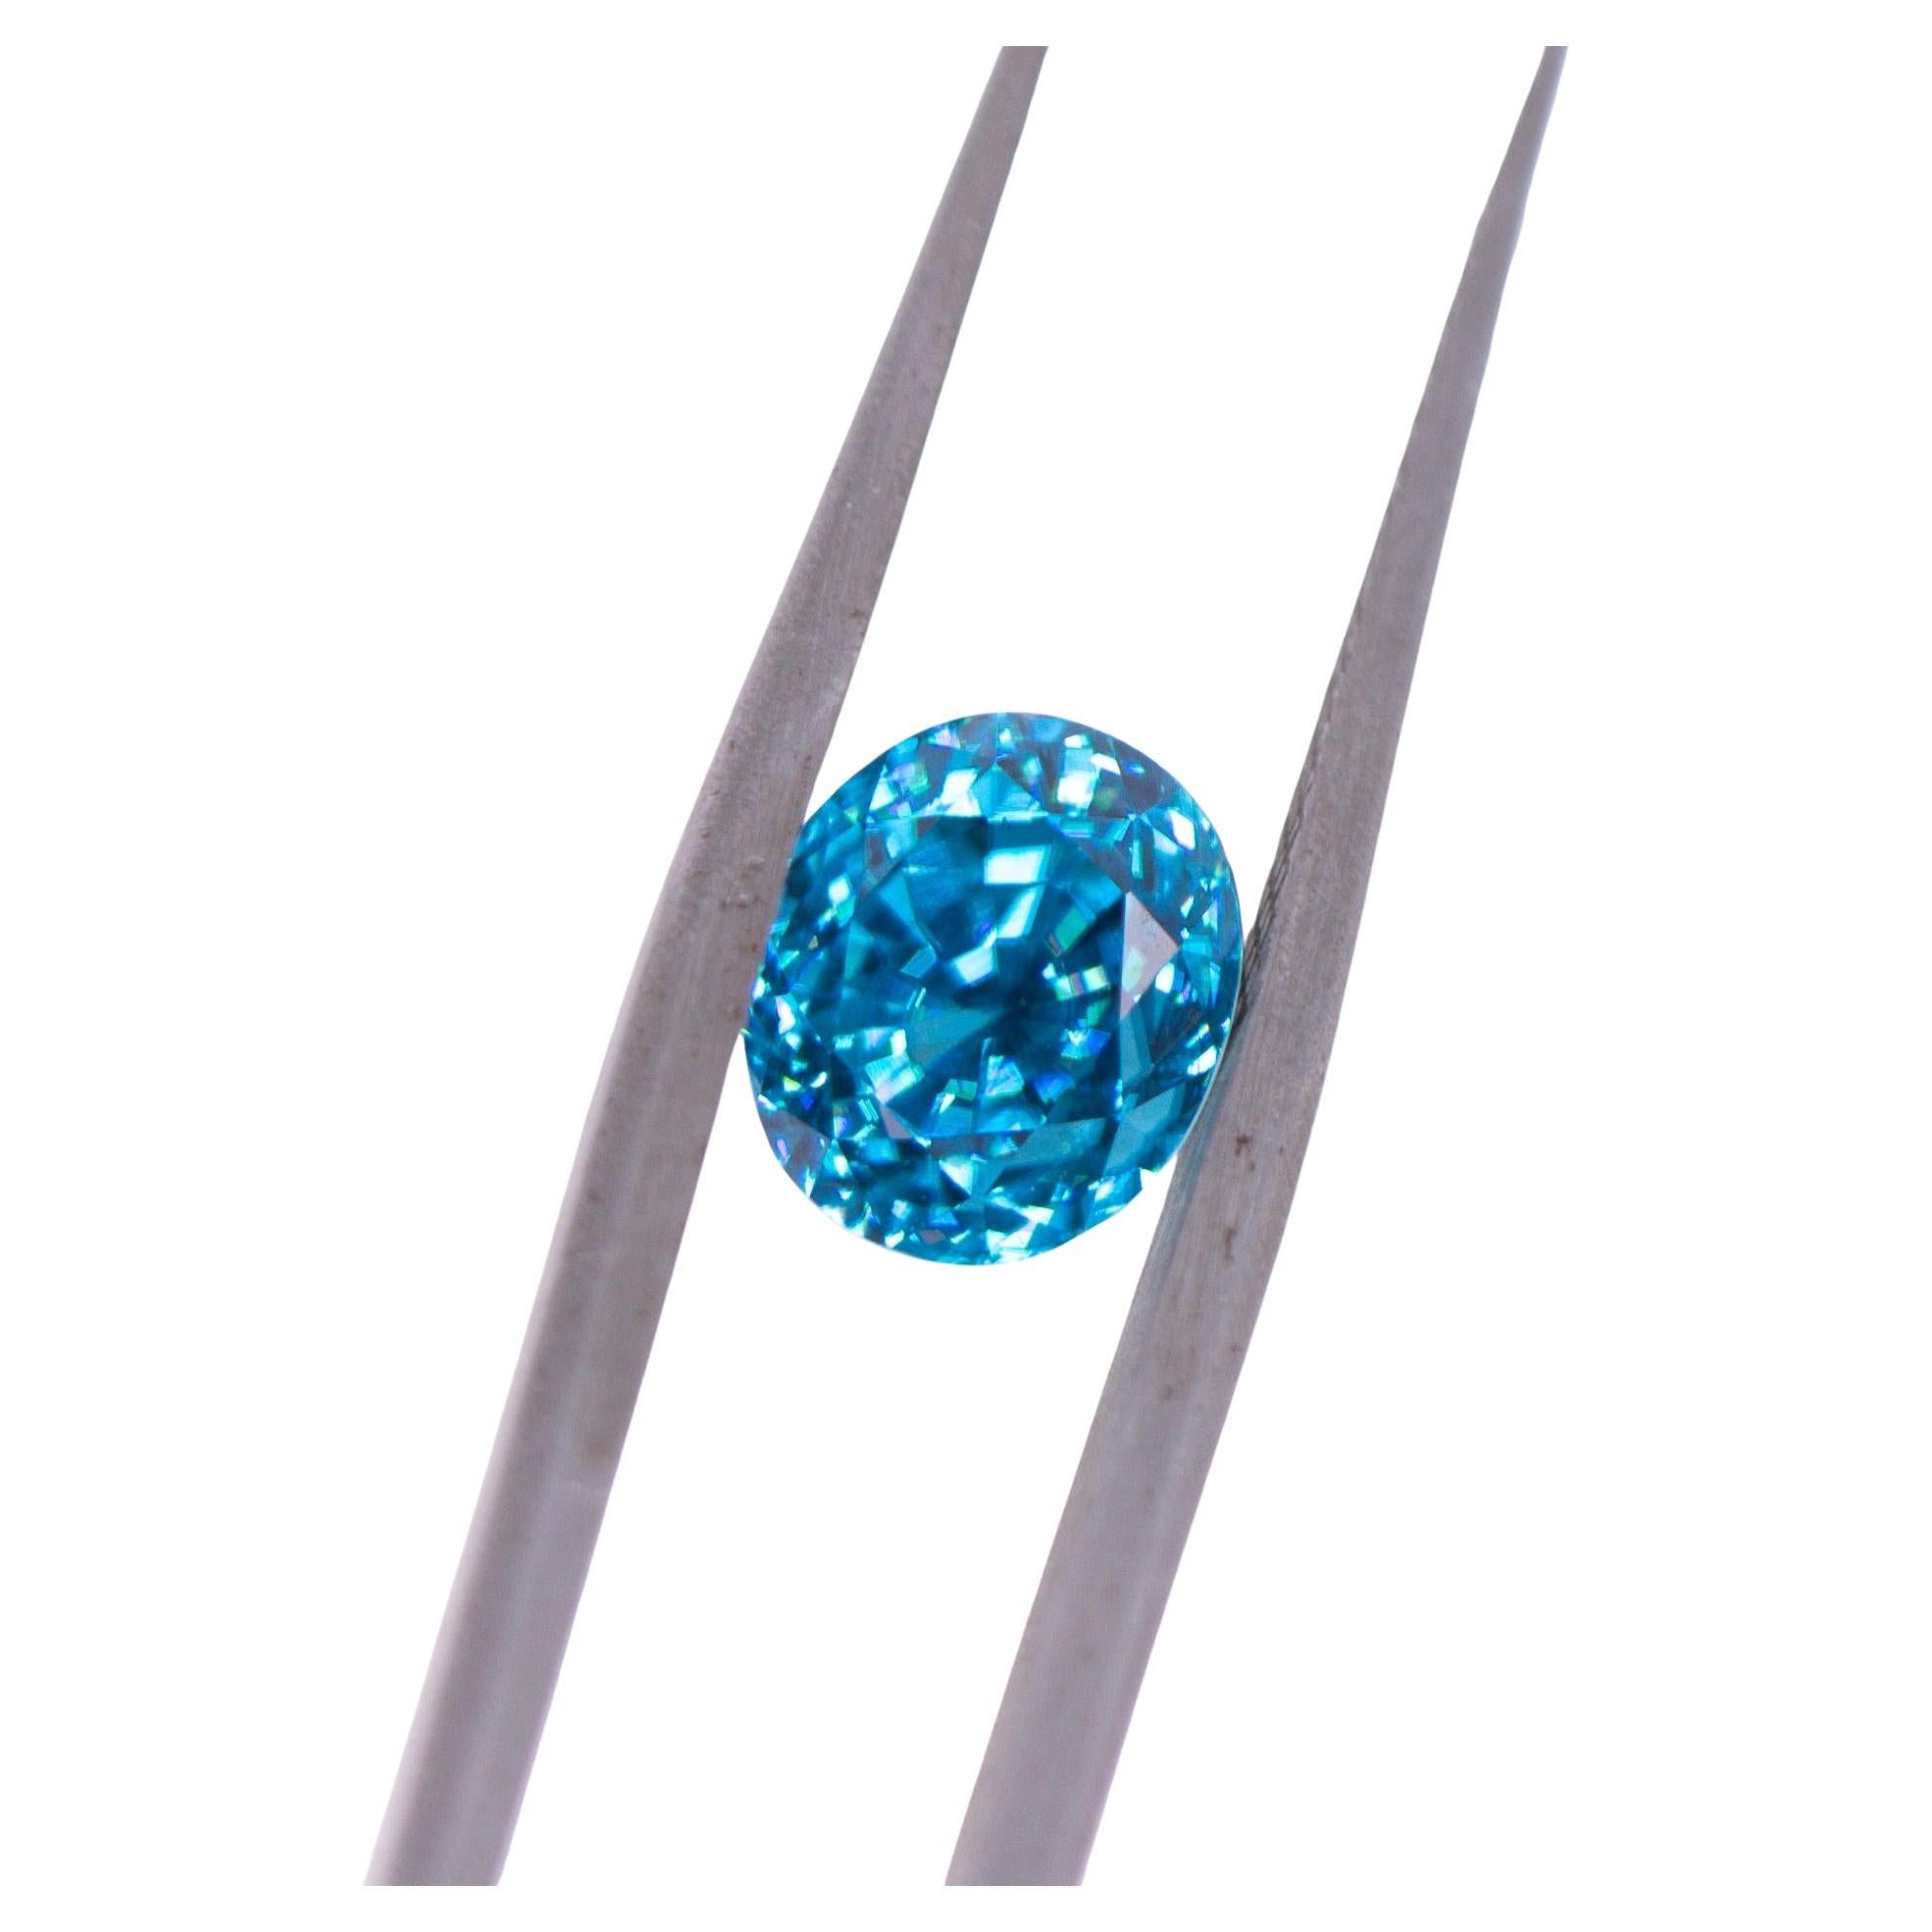 Sparkling 4.13 Carat Blue Zircon Gemstone  Oval 8x7mm For Sale